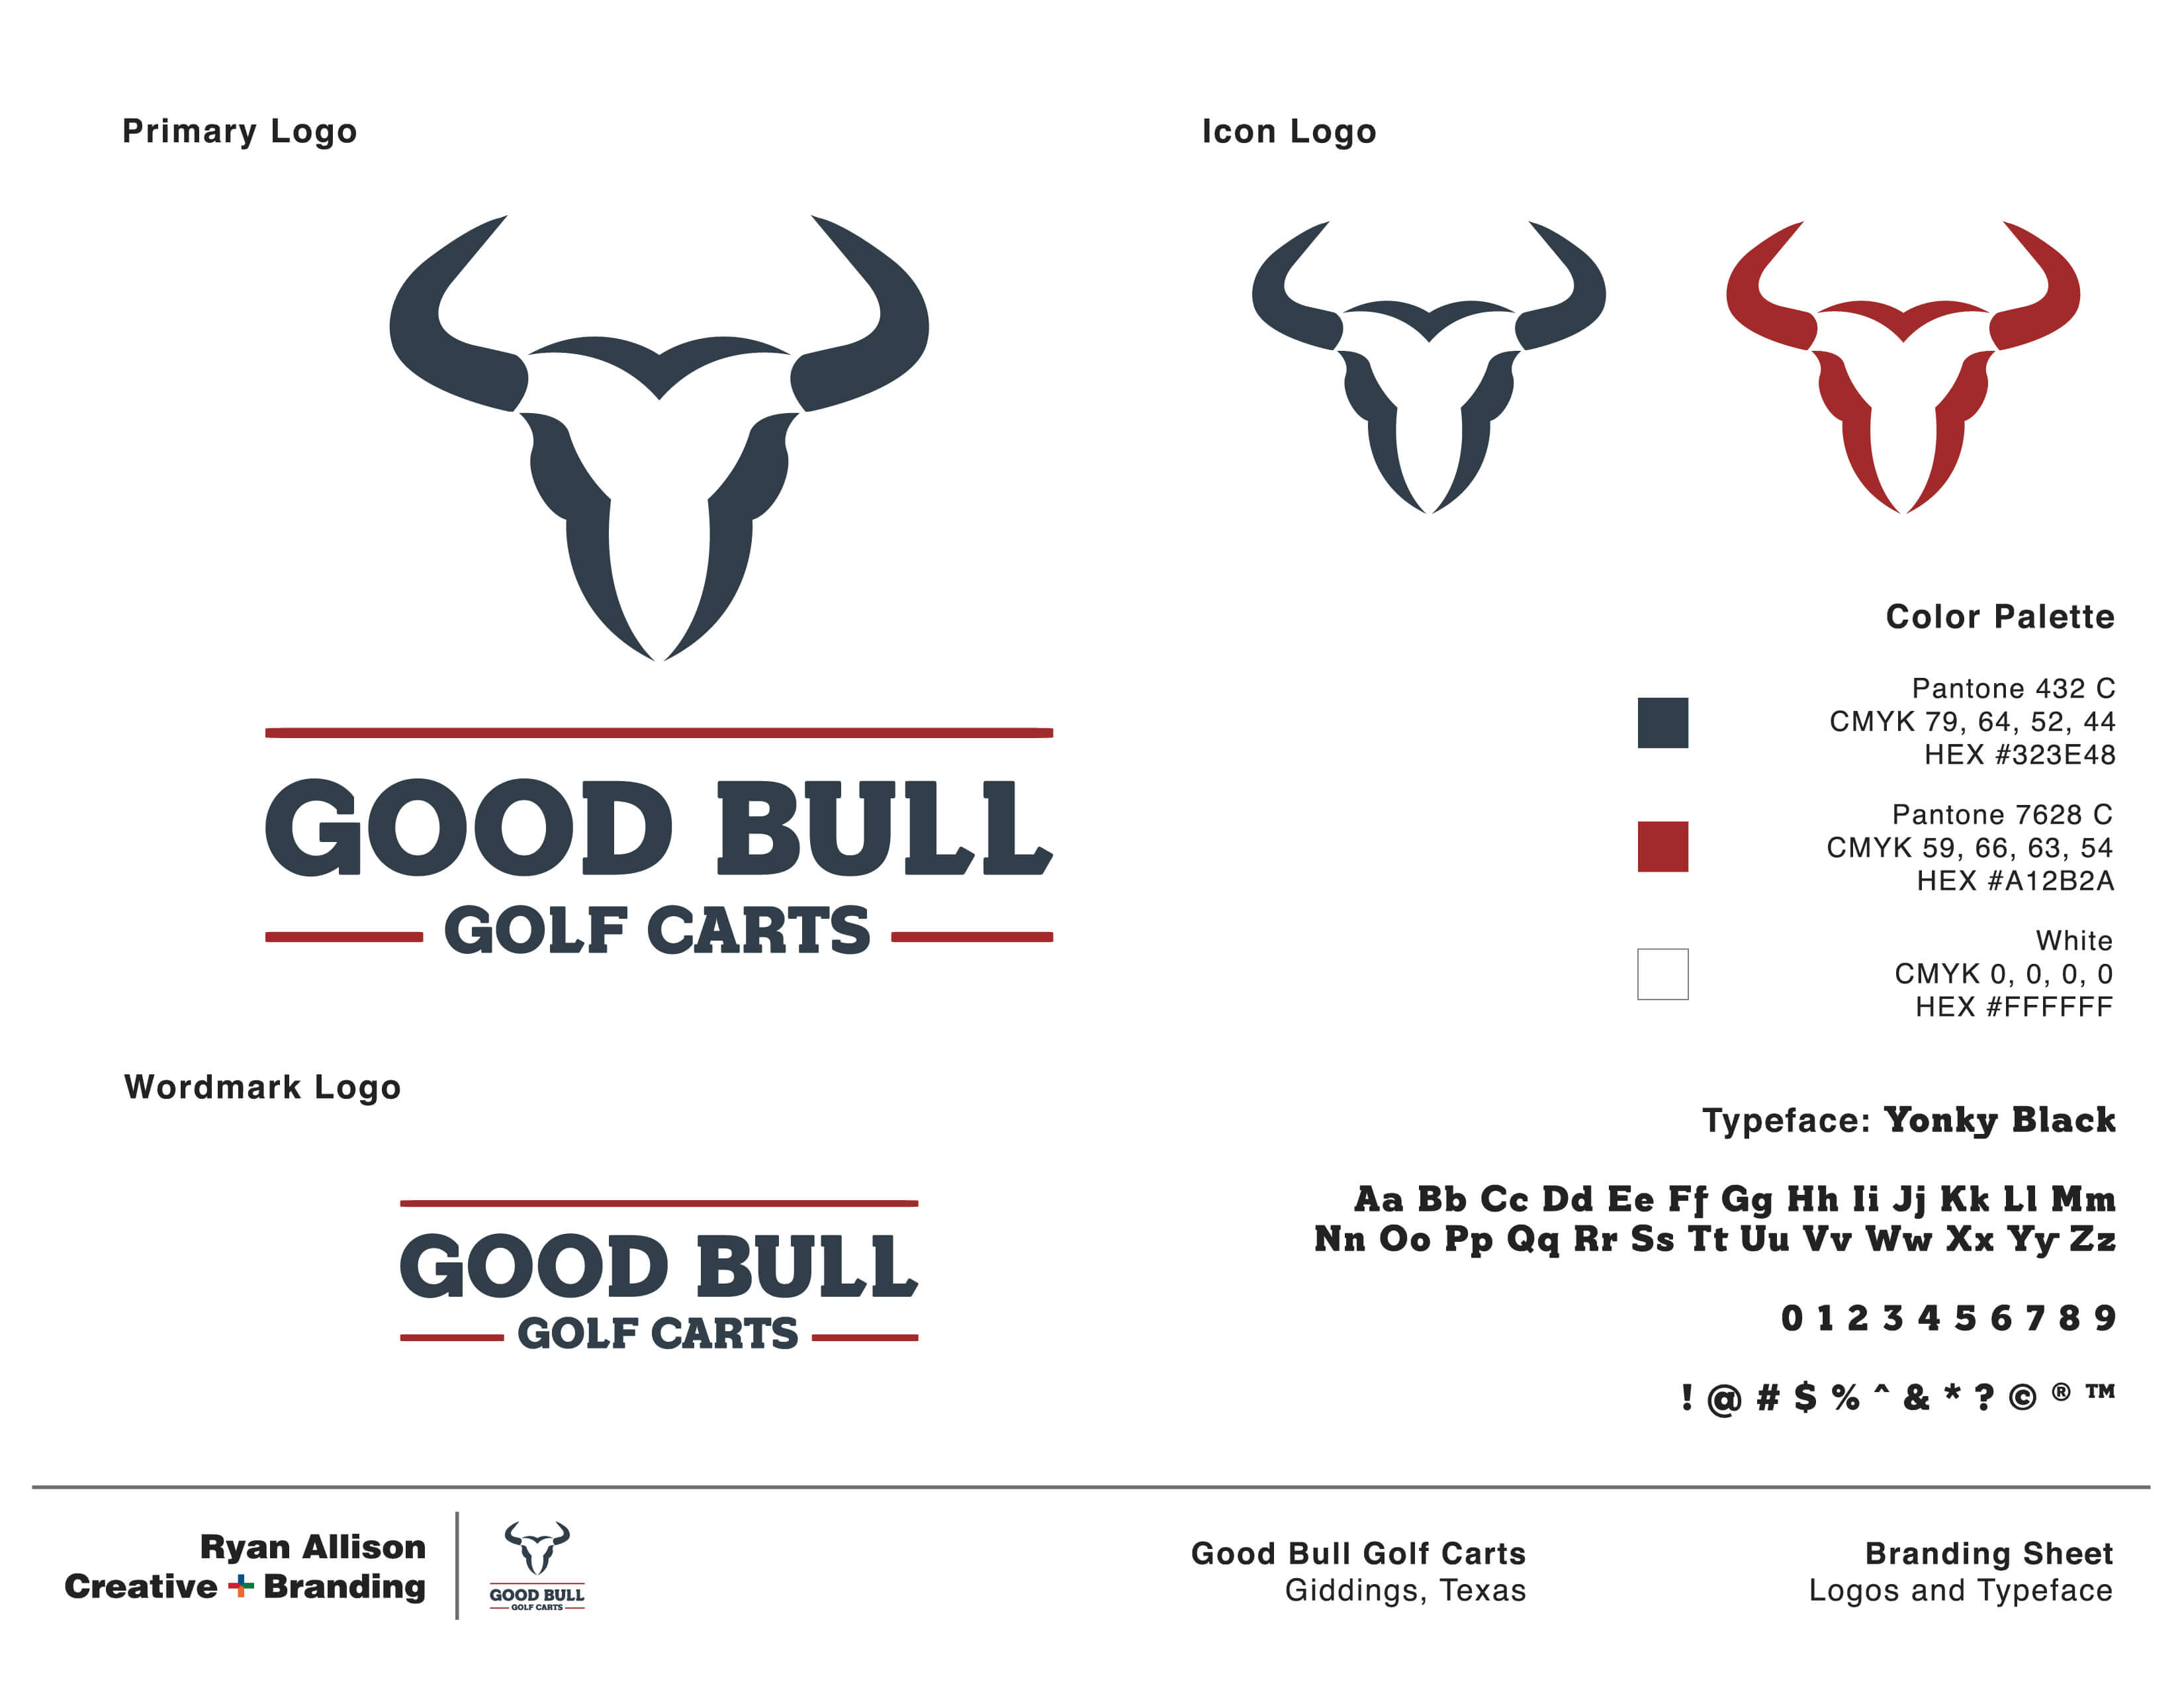 Good Bull Golf Carts - Branding Sheet Page 1 - Ryan Allison Creative + Branding